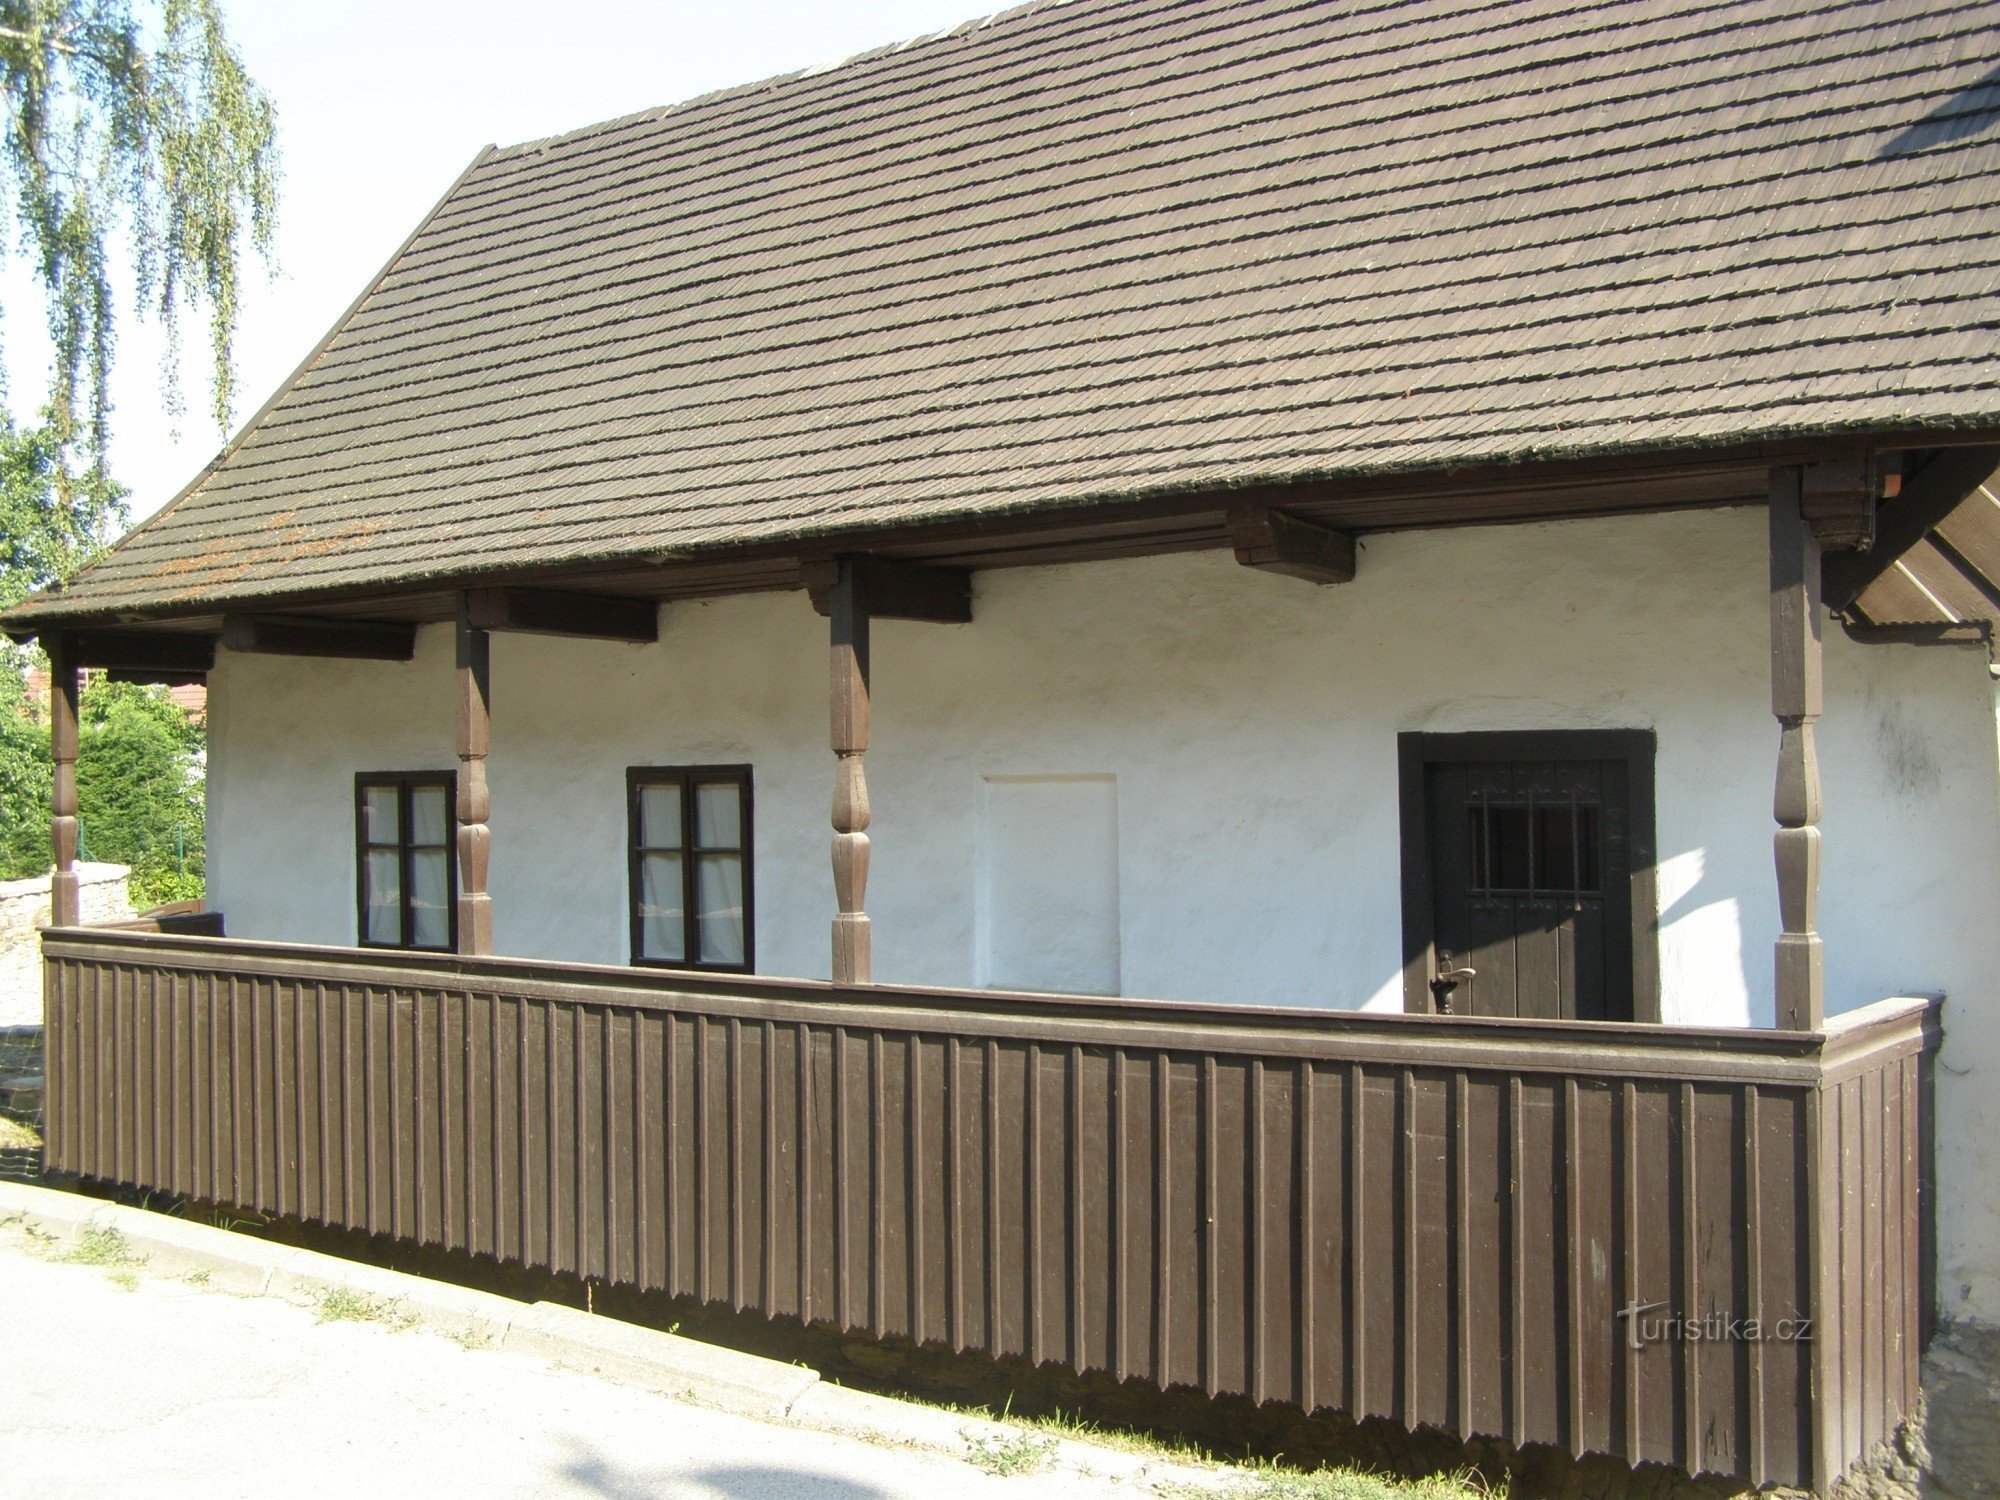 Dobruška - η γενέτειρα του FLVěk (Heka)